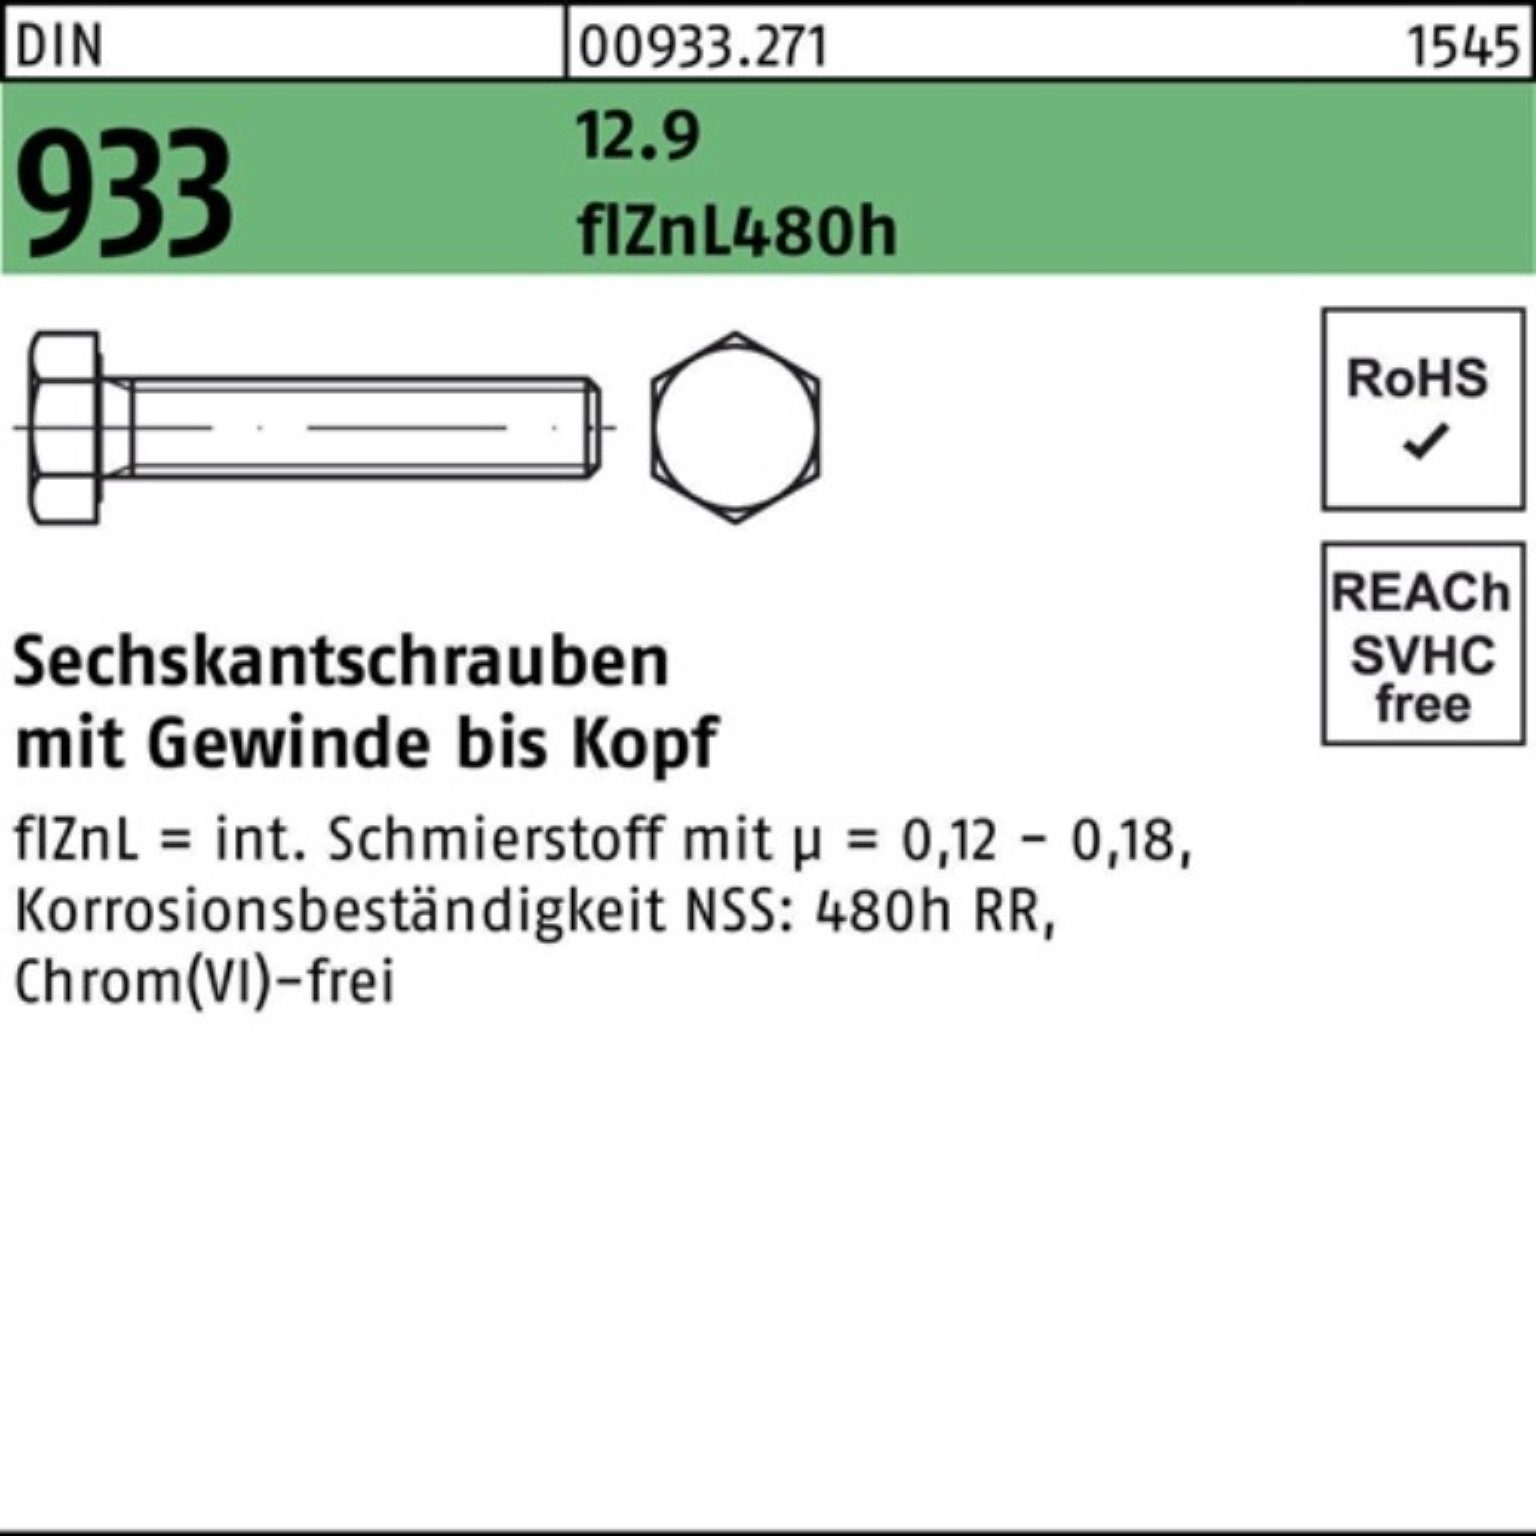 933 100er VG 480h Reyher Sechskantschraube flZnL Sechskantschraube M16x DIN zinkla 30 12.9 Pack